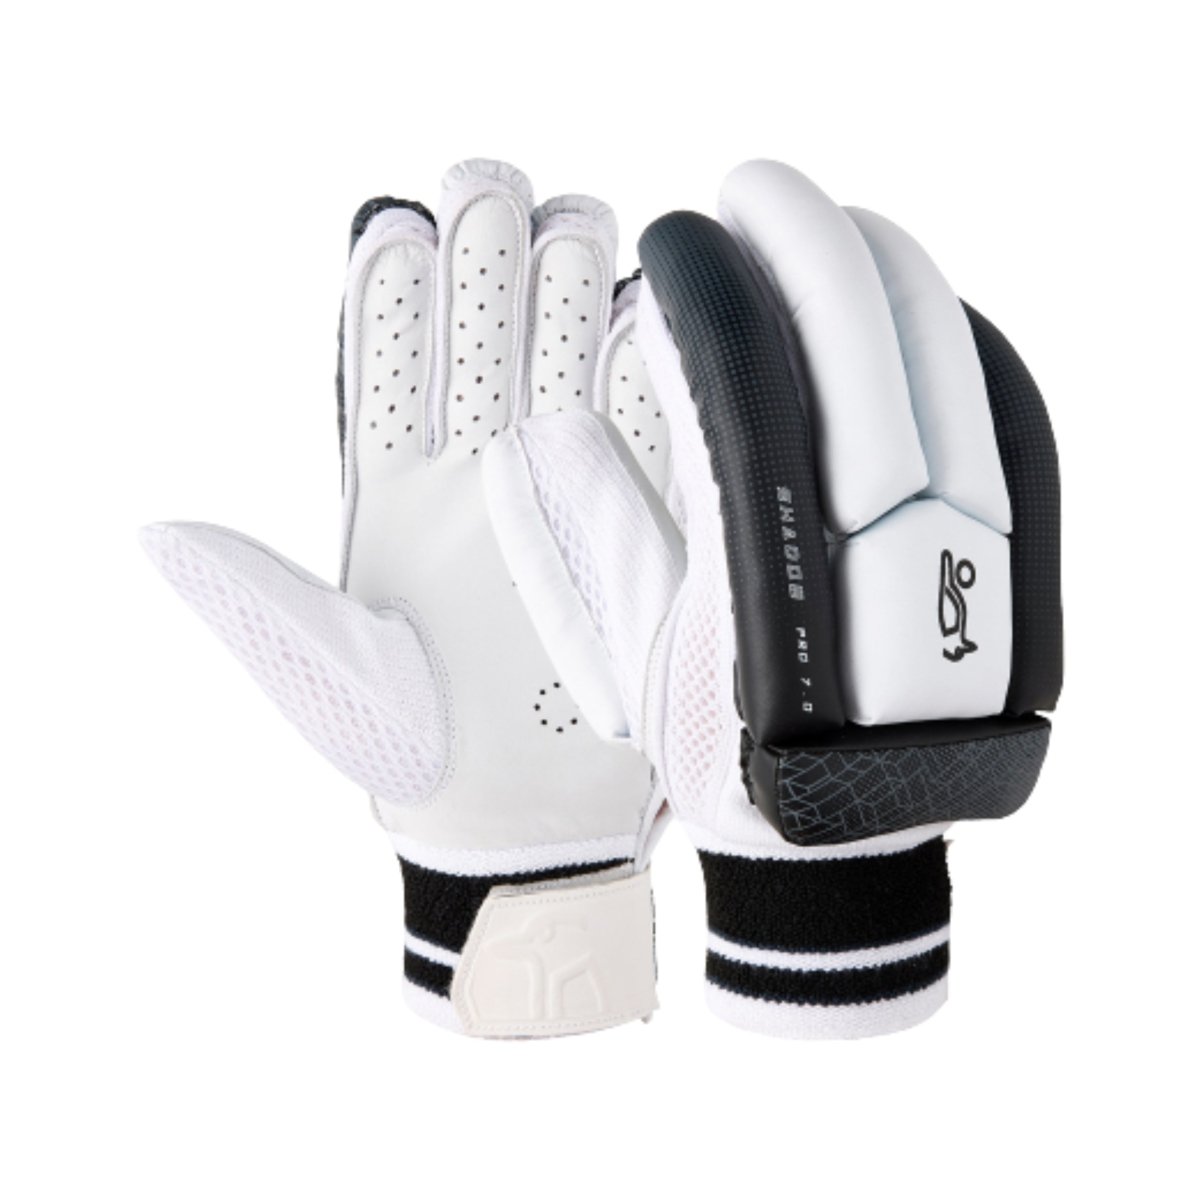 Kookaburra Shadow Pro 7.0 Cricket Batting Gloves Junior - Acrux Sports